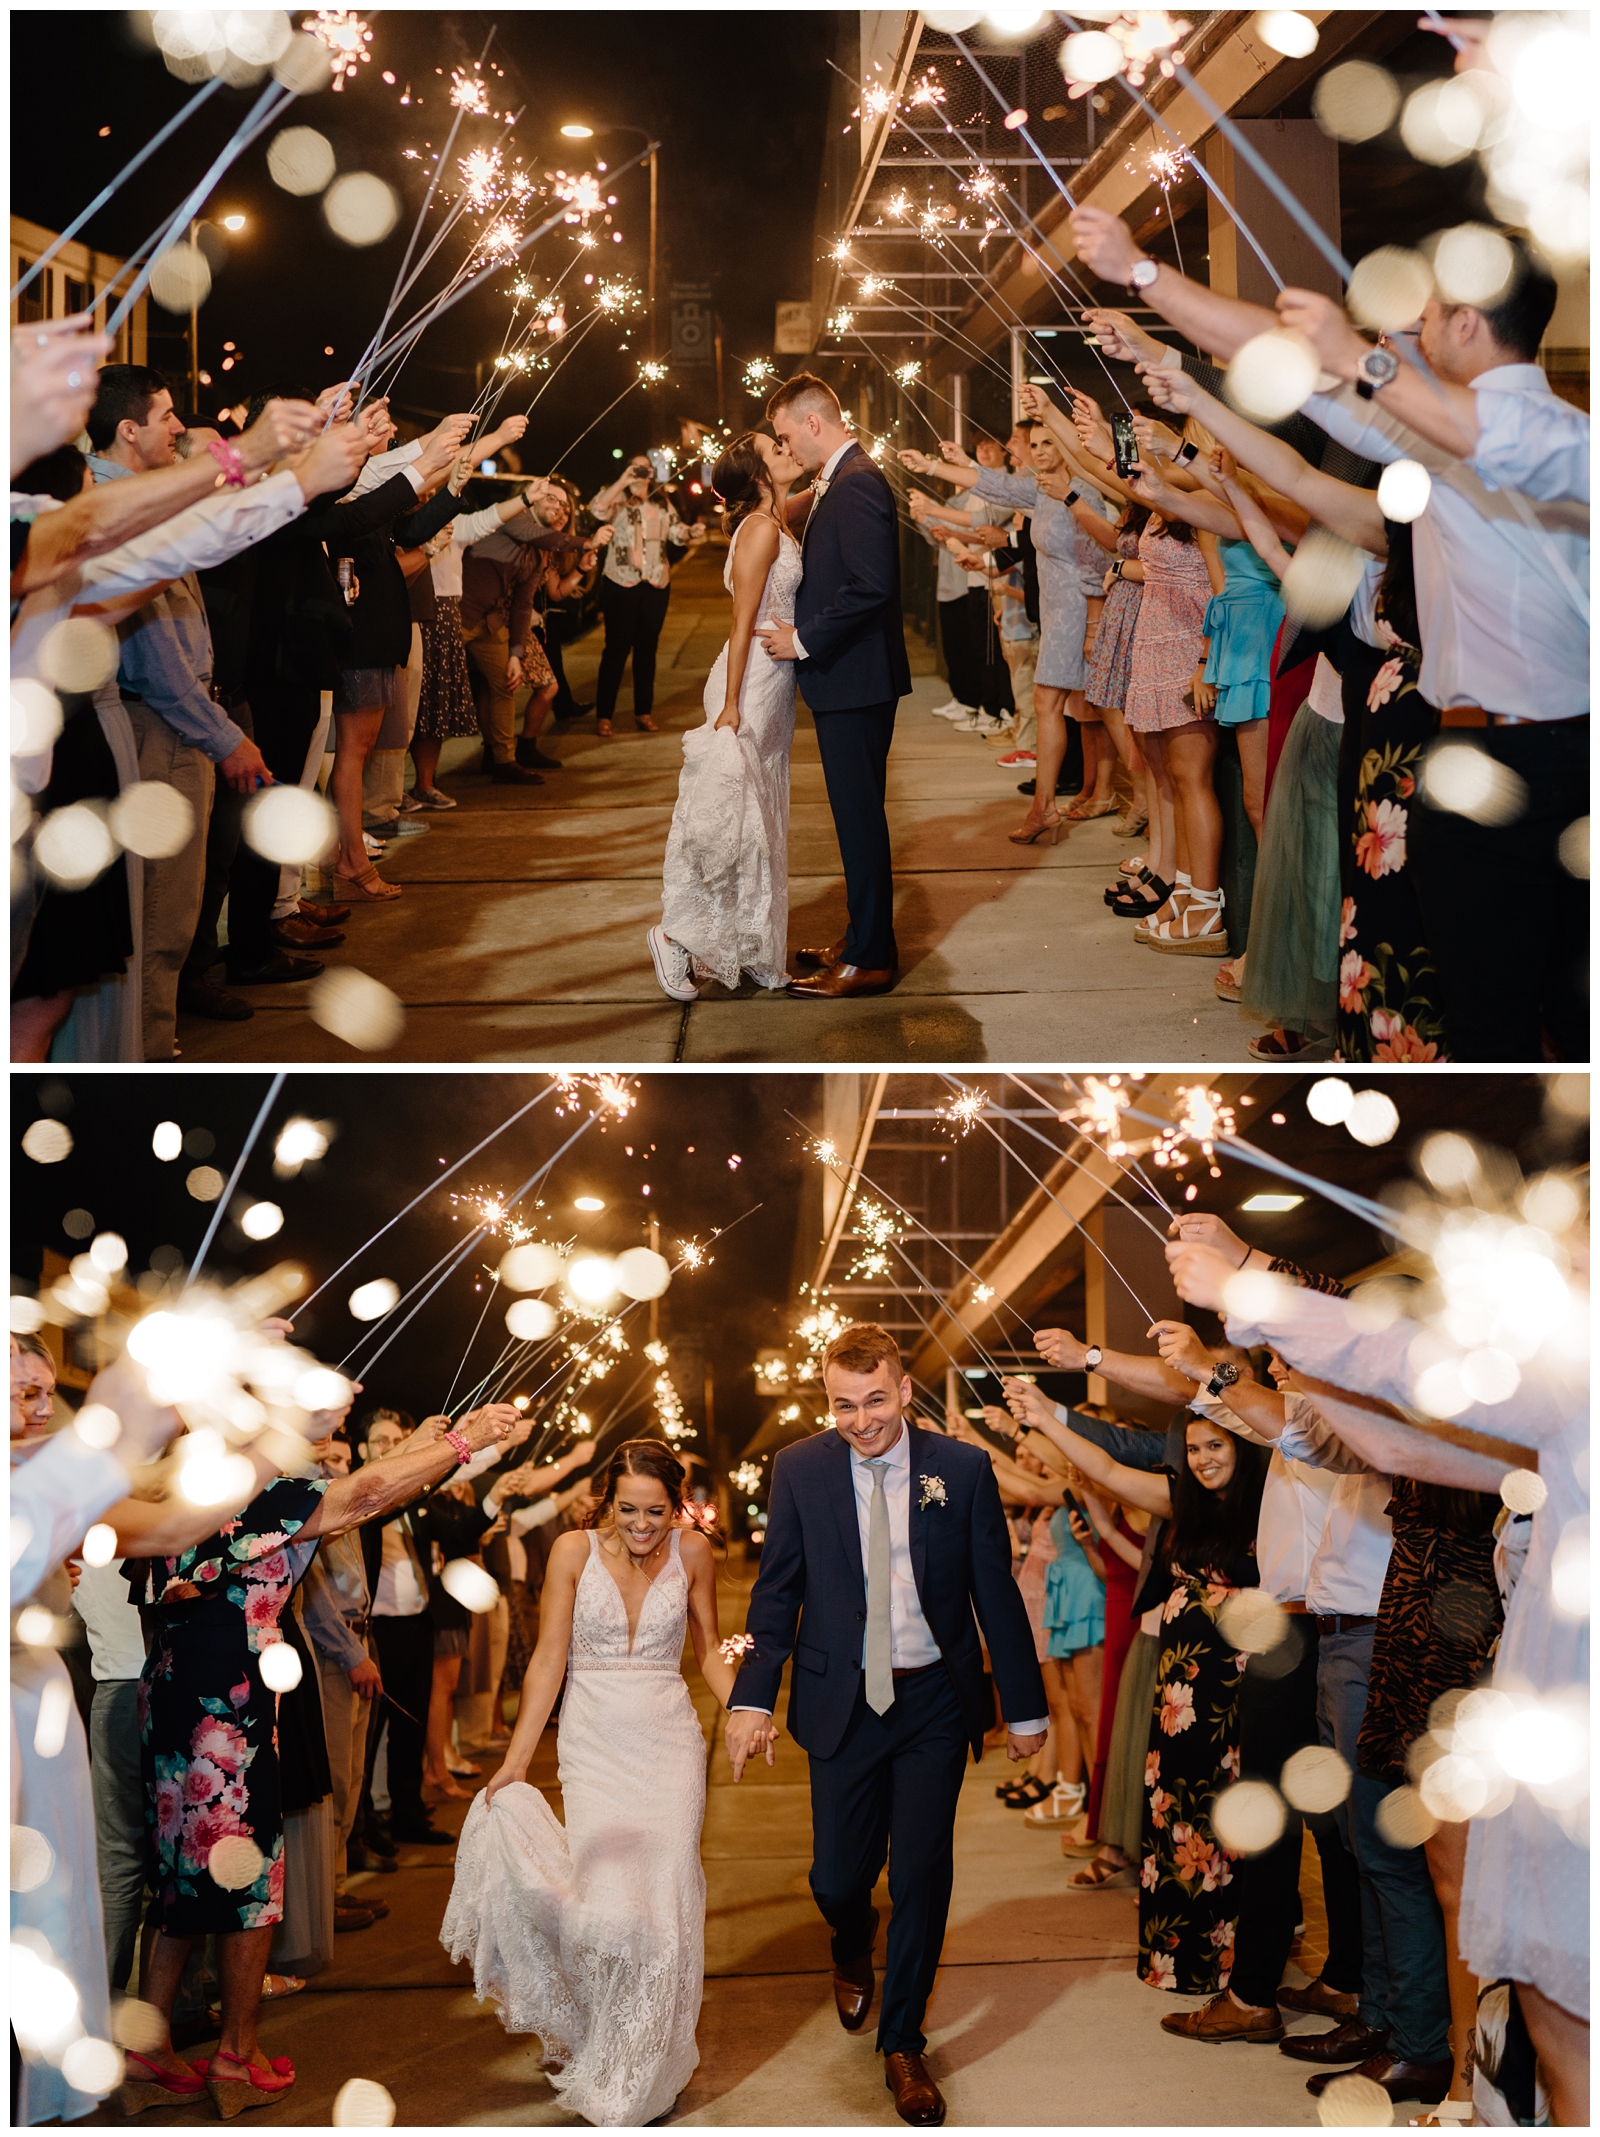 Romantic sparkler exit by NC wedding photographer